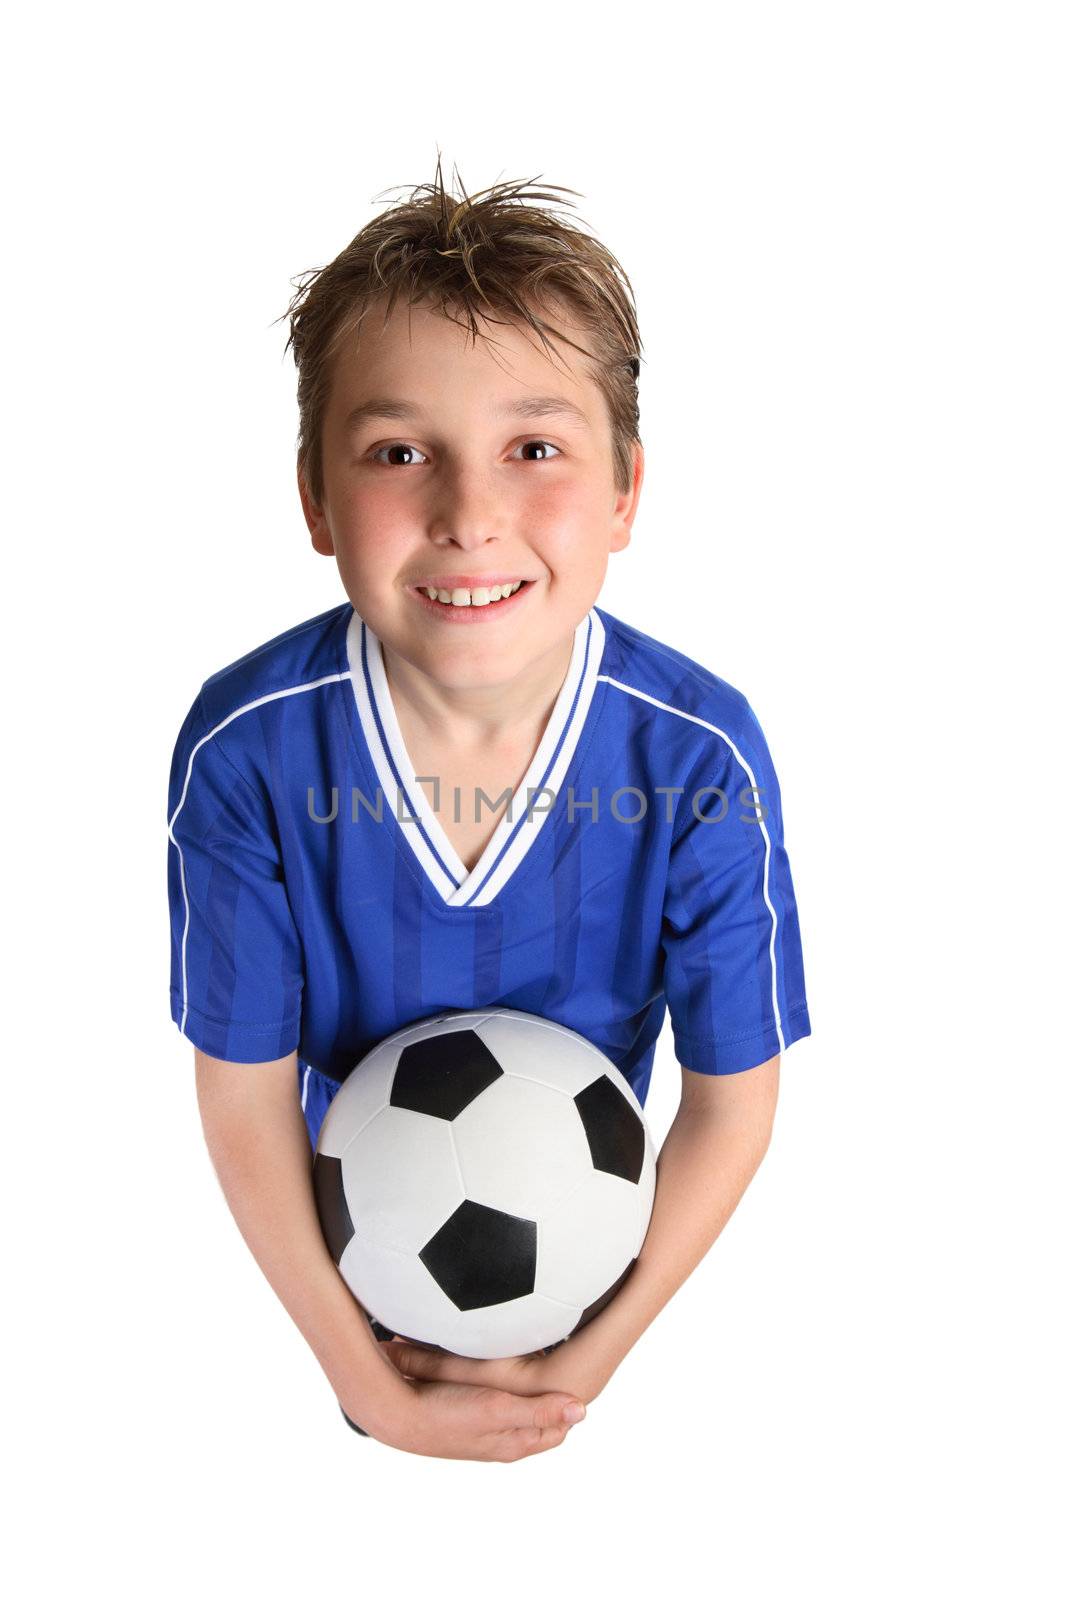 Boy holding soccer ball by lovleah